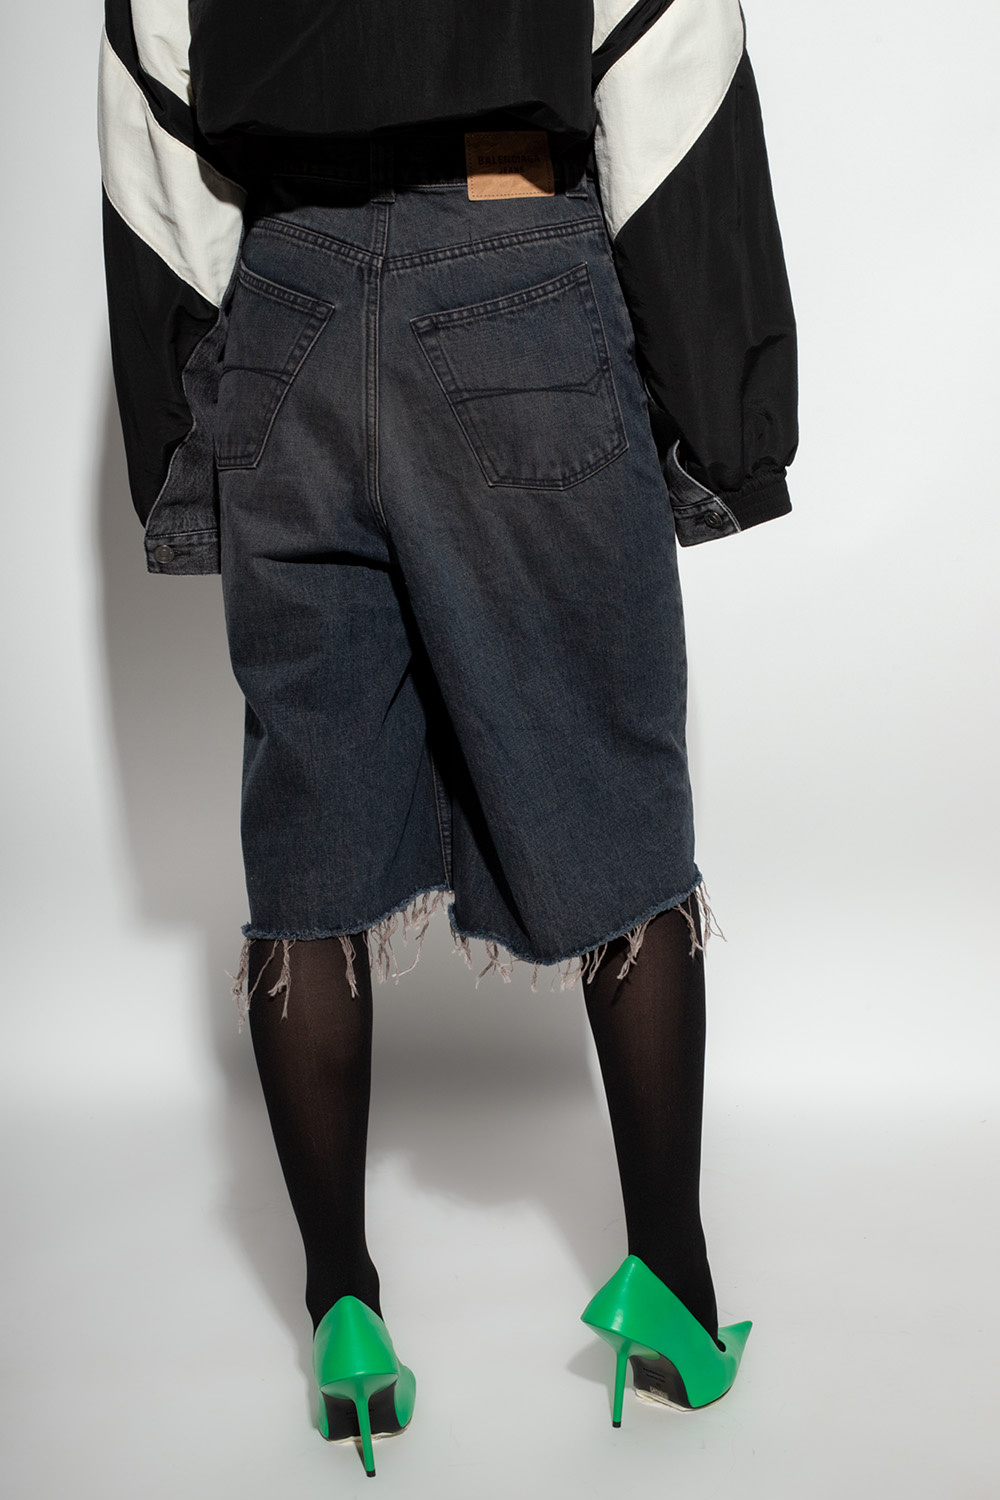 Black Nylon Mini Skirt by Balenciaga on Sale